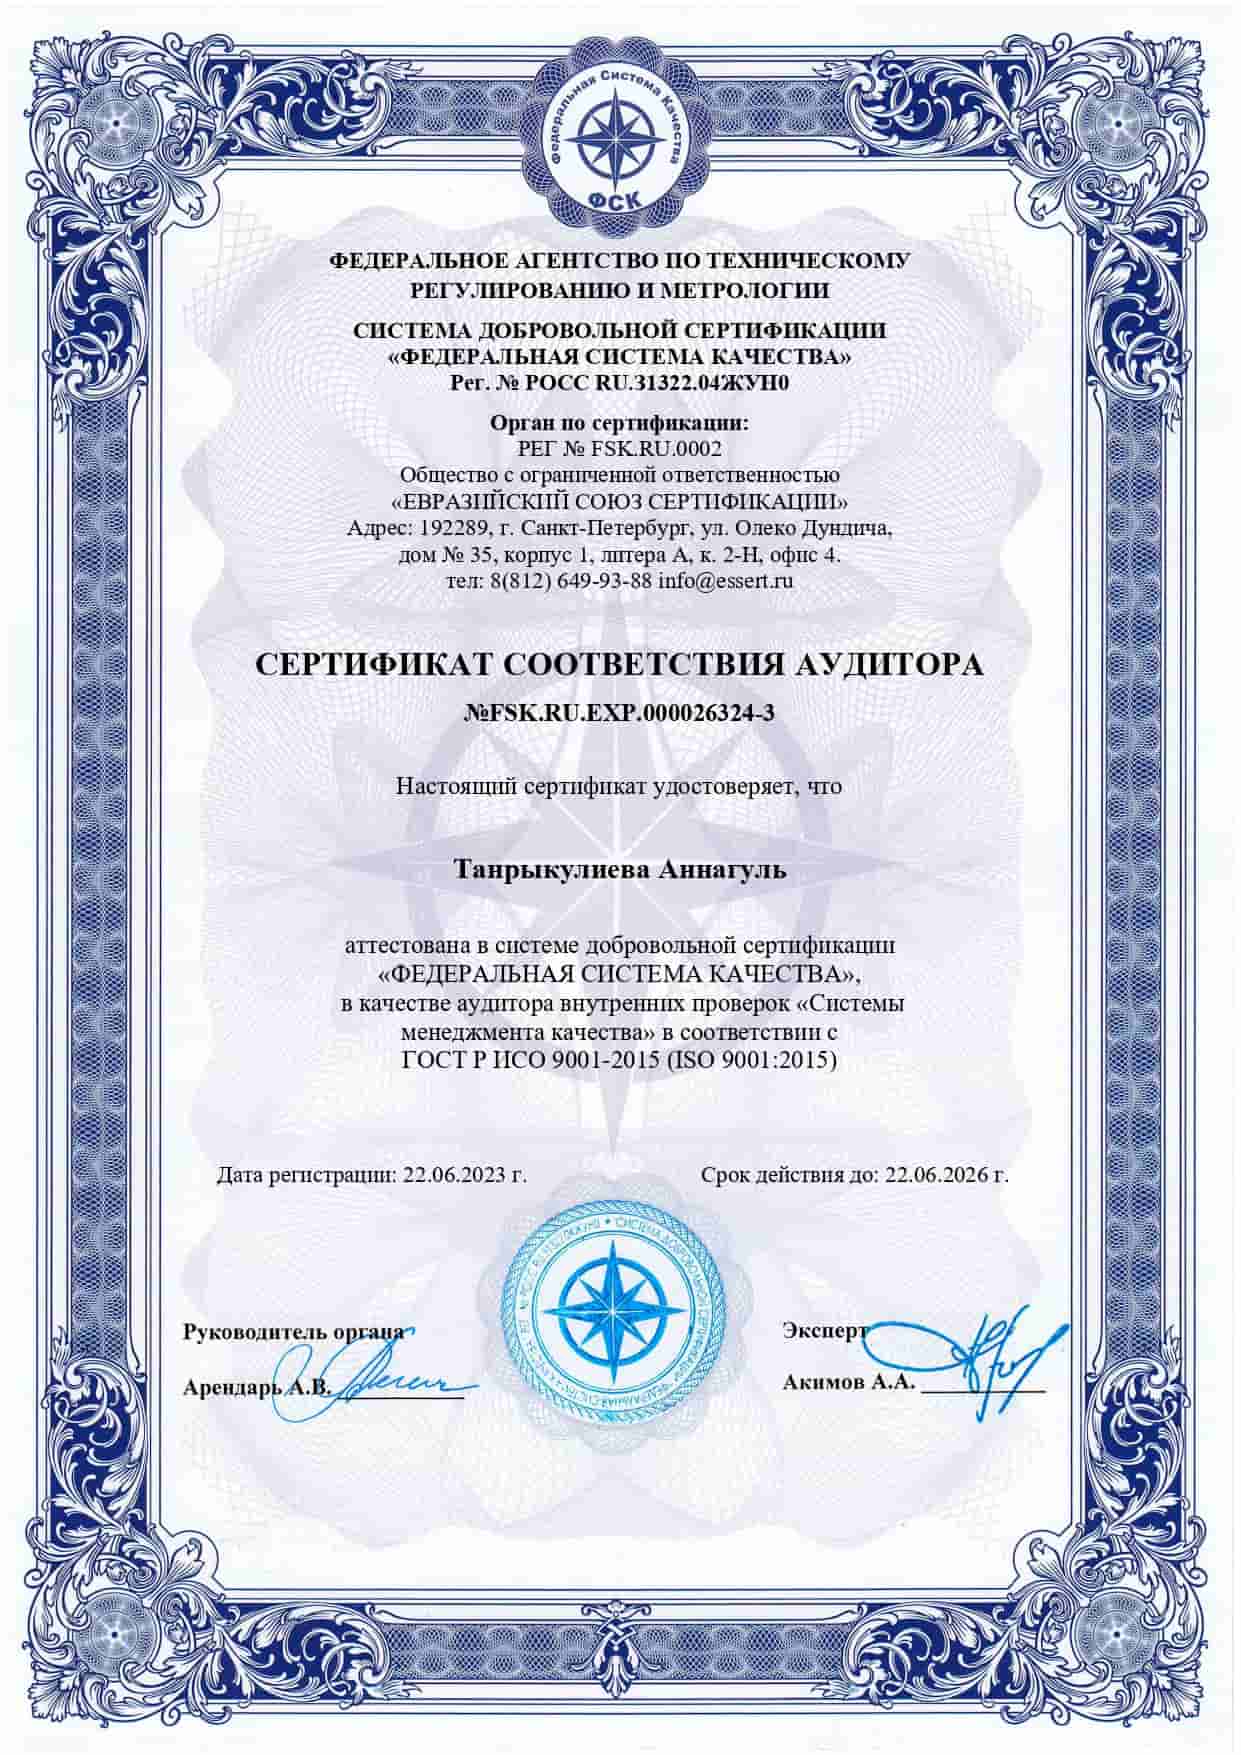 ISO 9001 Auditor Certificate Annagul